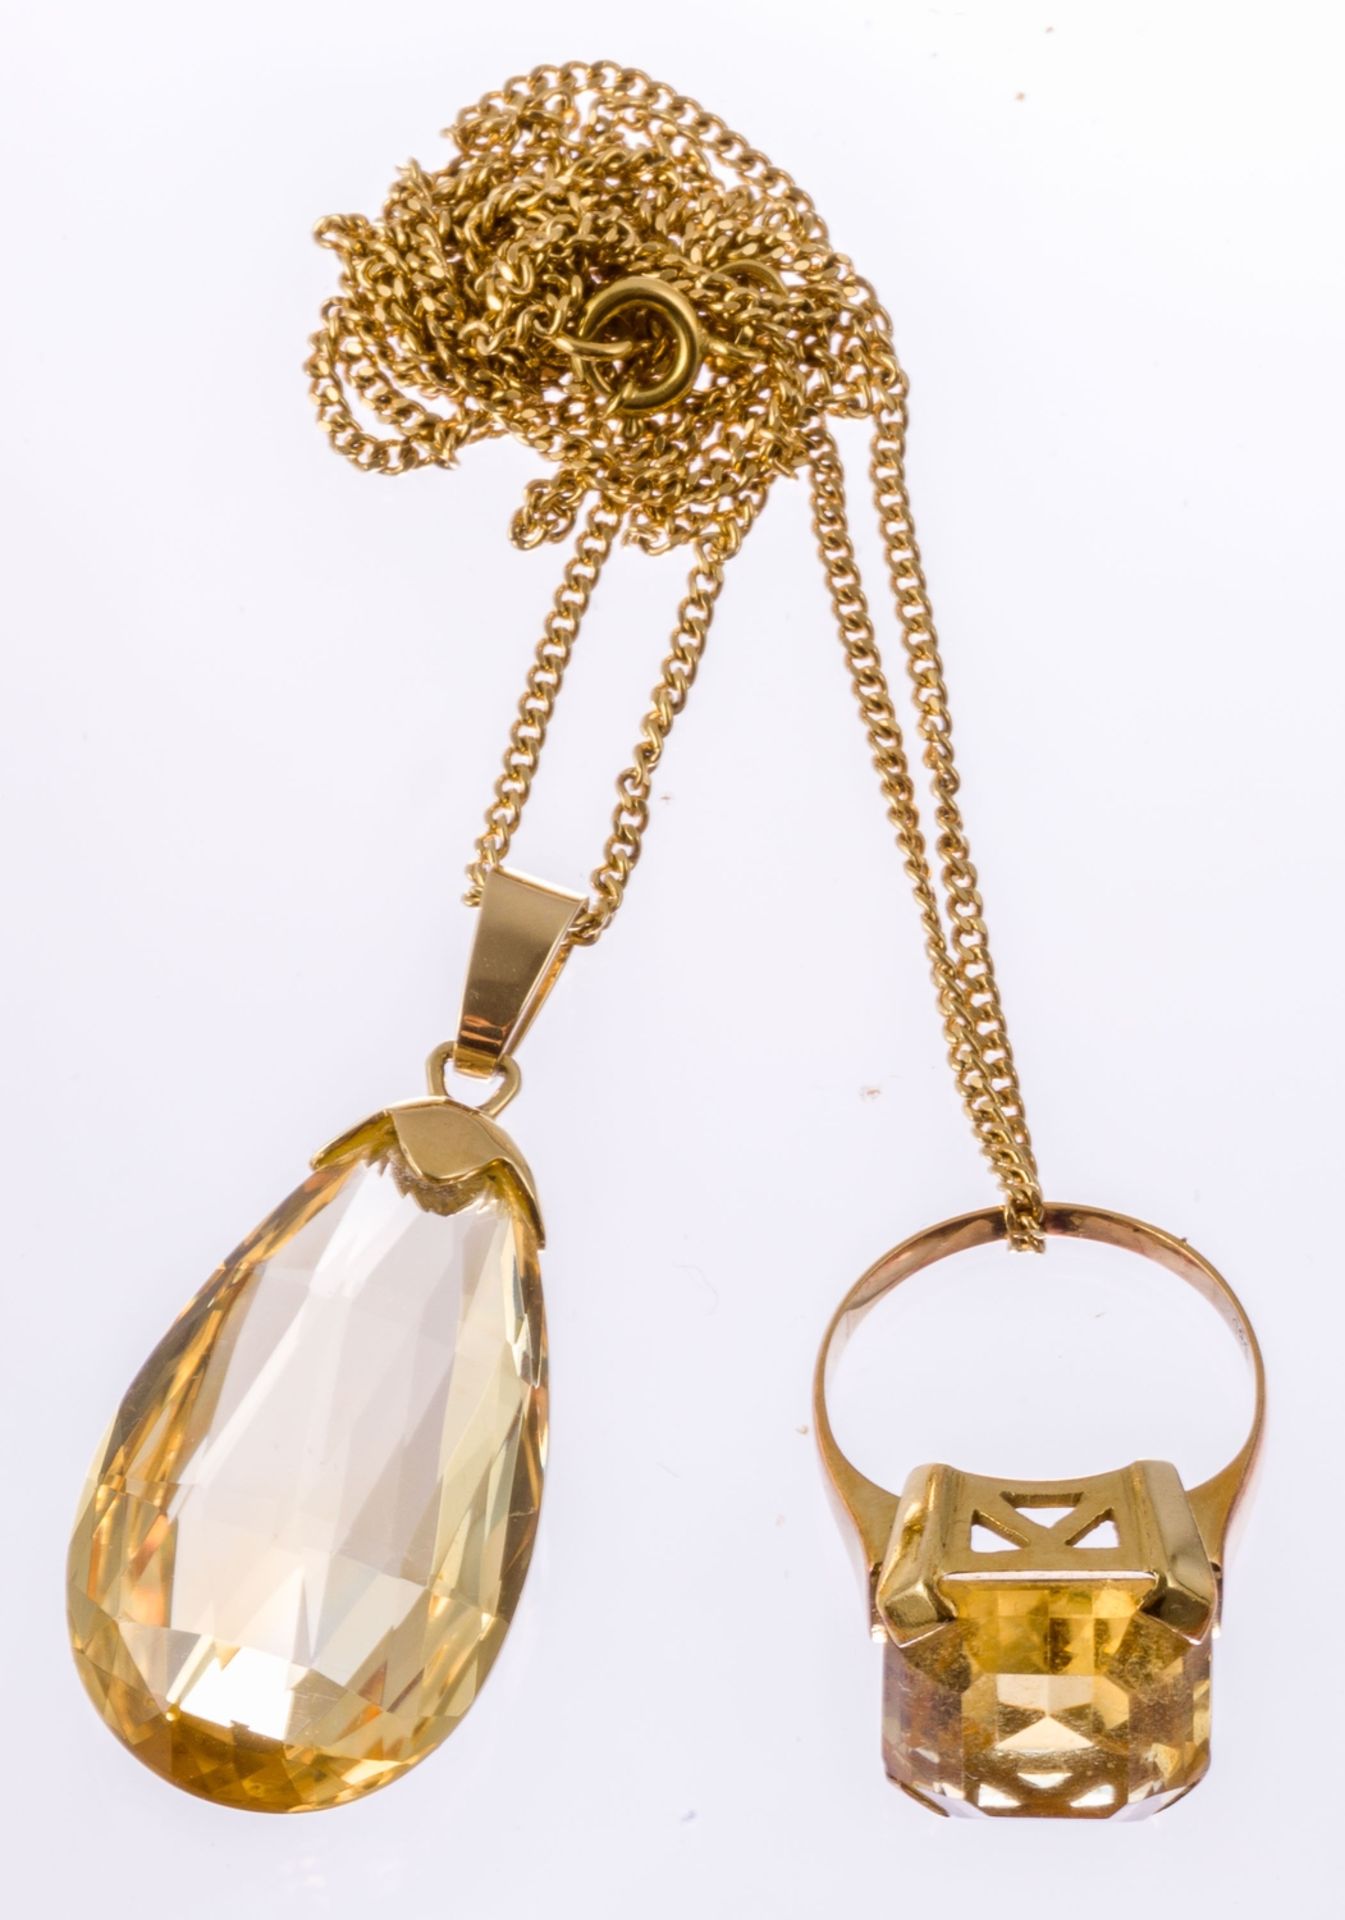 Gelber Topas-Tropfenanhänger750/f. Gold. Facettiert. L. ca. 3,4 cm. An 750/f. Goldgliederkette. Gew.